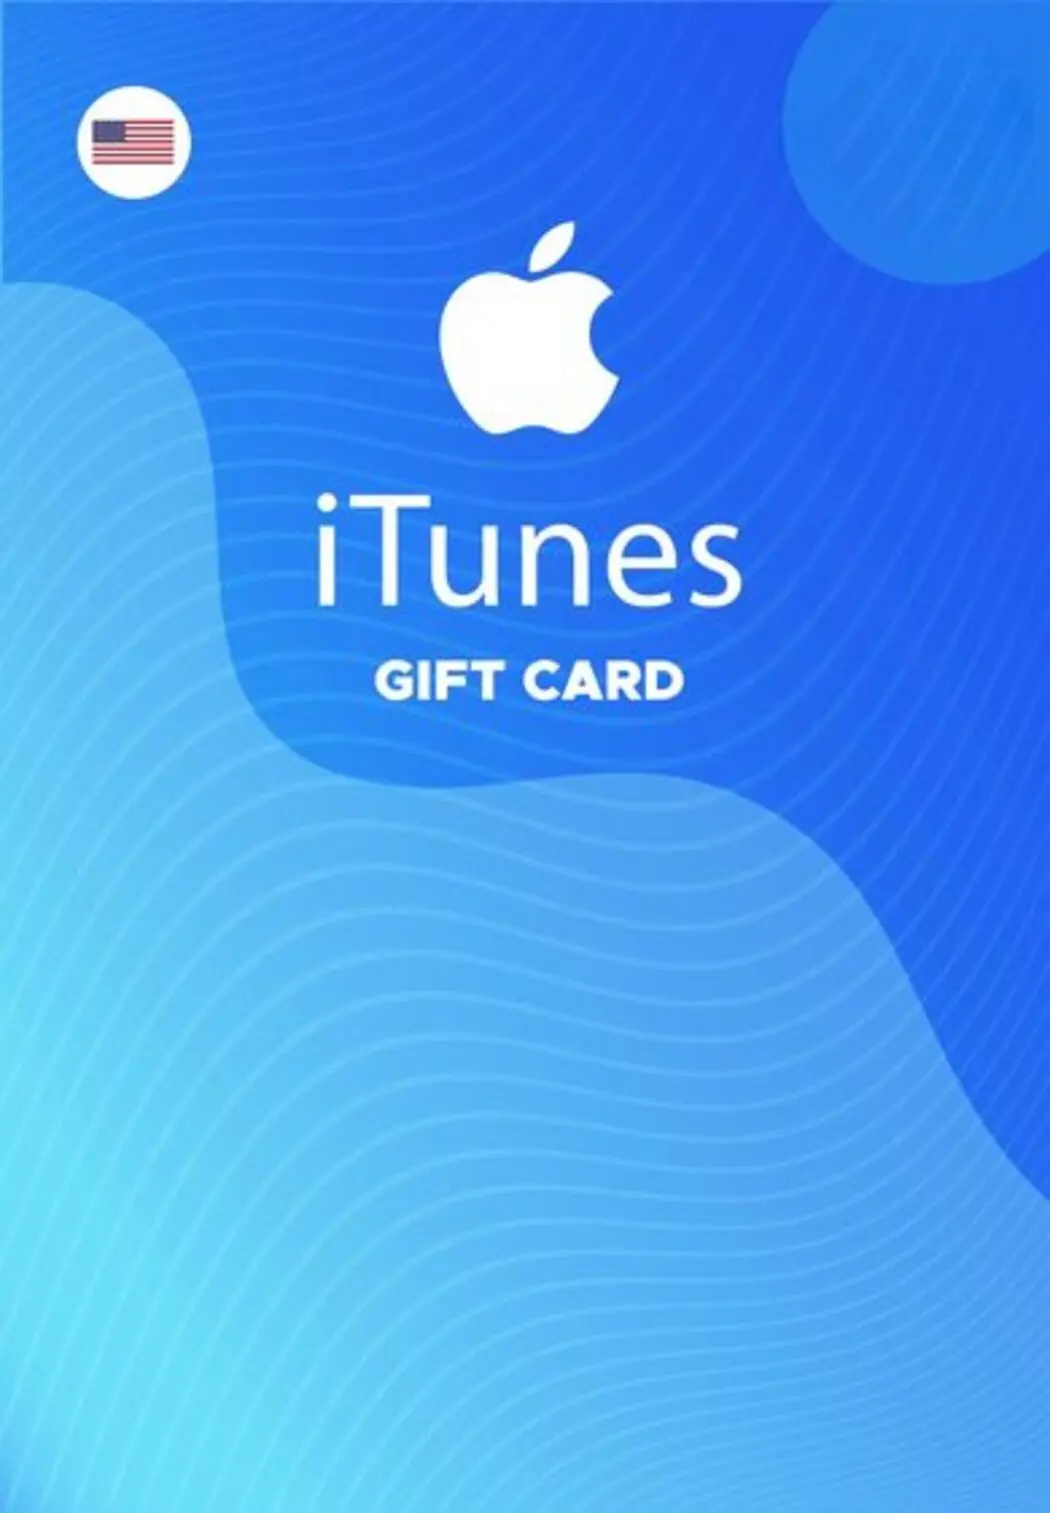 iTunes $2 Gift Card (US) - Digital Code